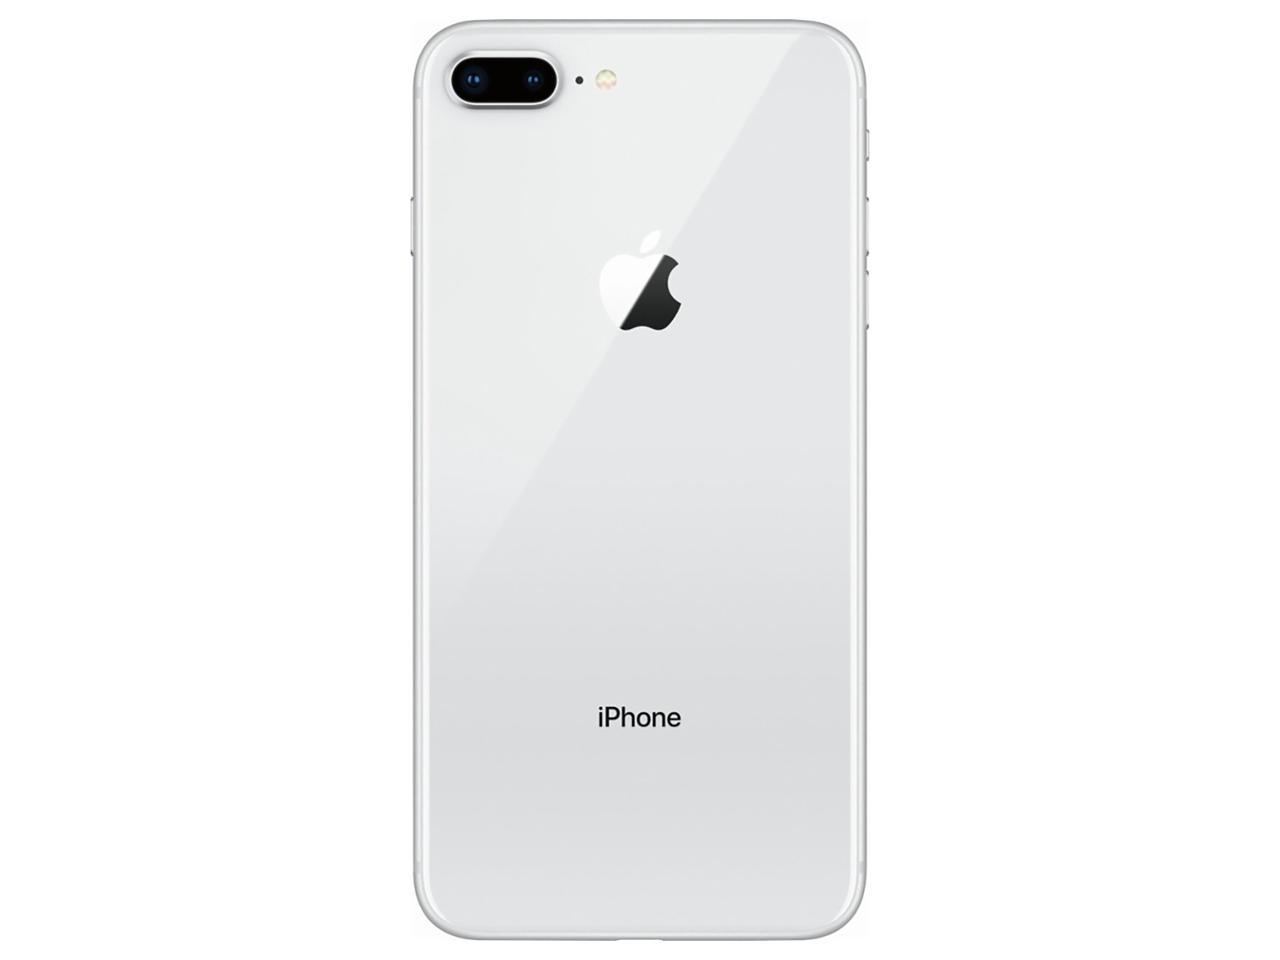 Apple iPhone 8 Plus 128GB Unlocked GSM/CDMA Phone w/ Dual 12MP Camera